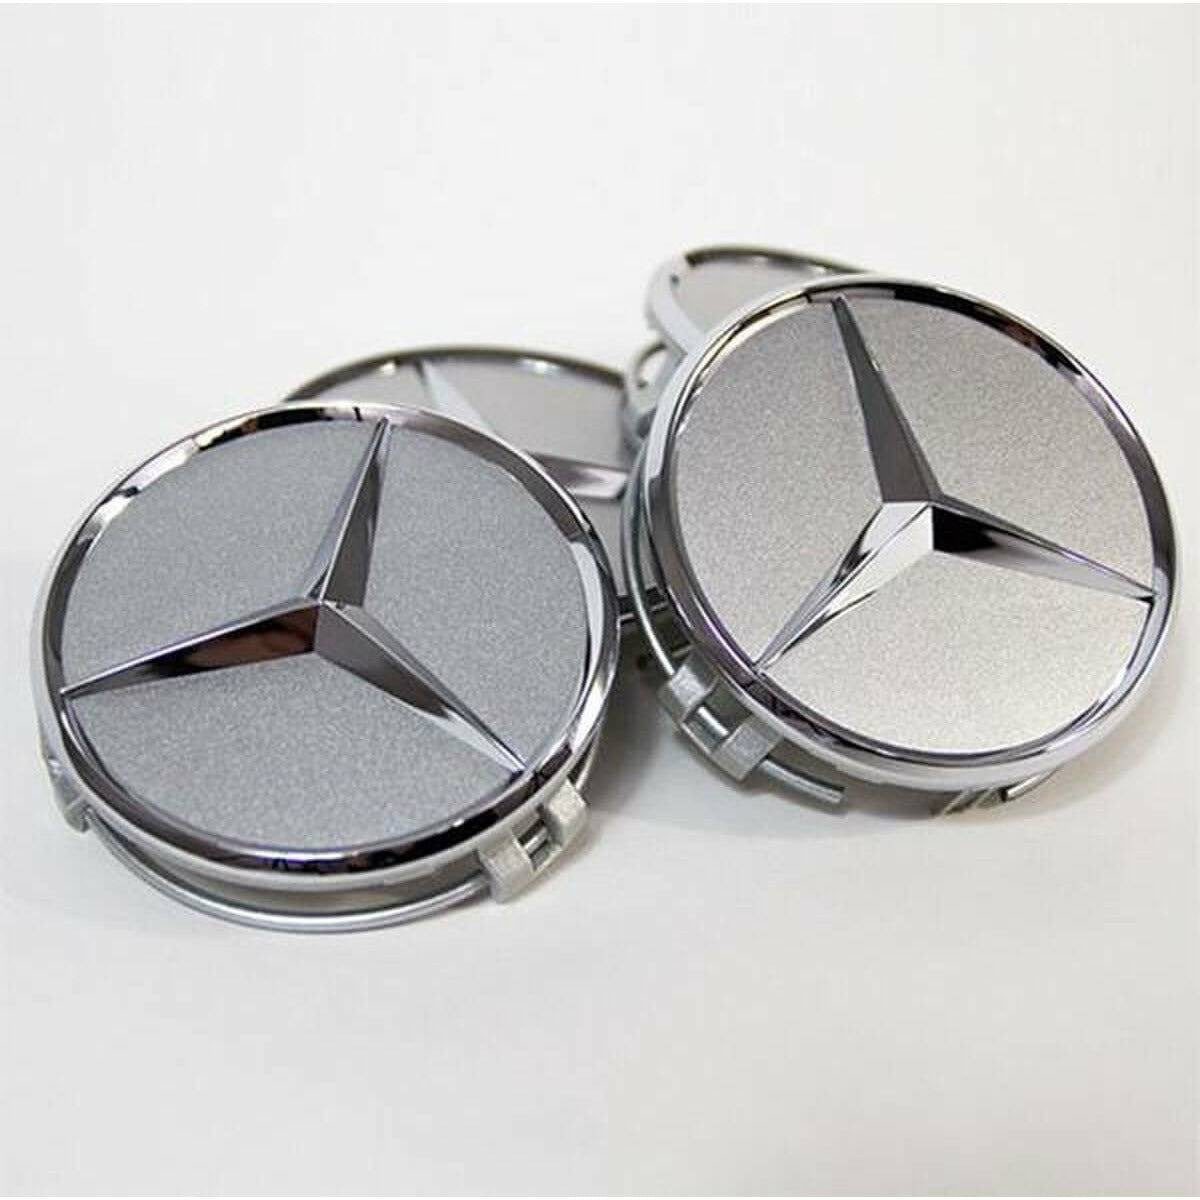 Lot de 4 Cache Moyeu de Roue 60mm Full Silver Modifiés pour Jante Mercedes  - Logo Mercedes Benz - Cdiscount Auto